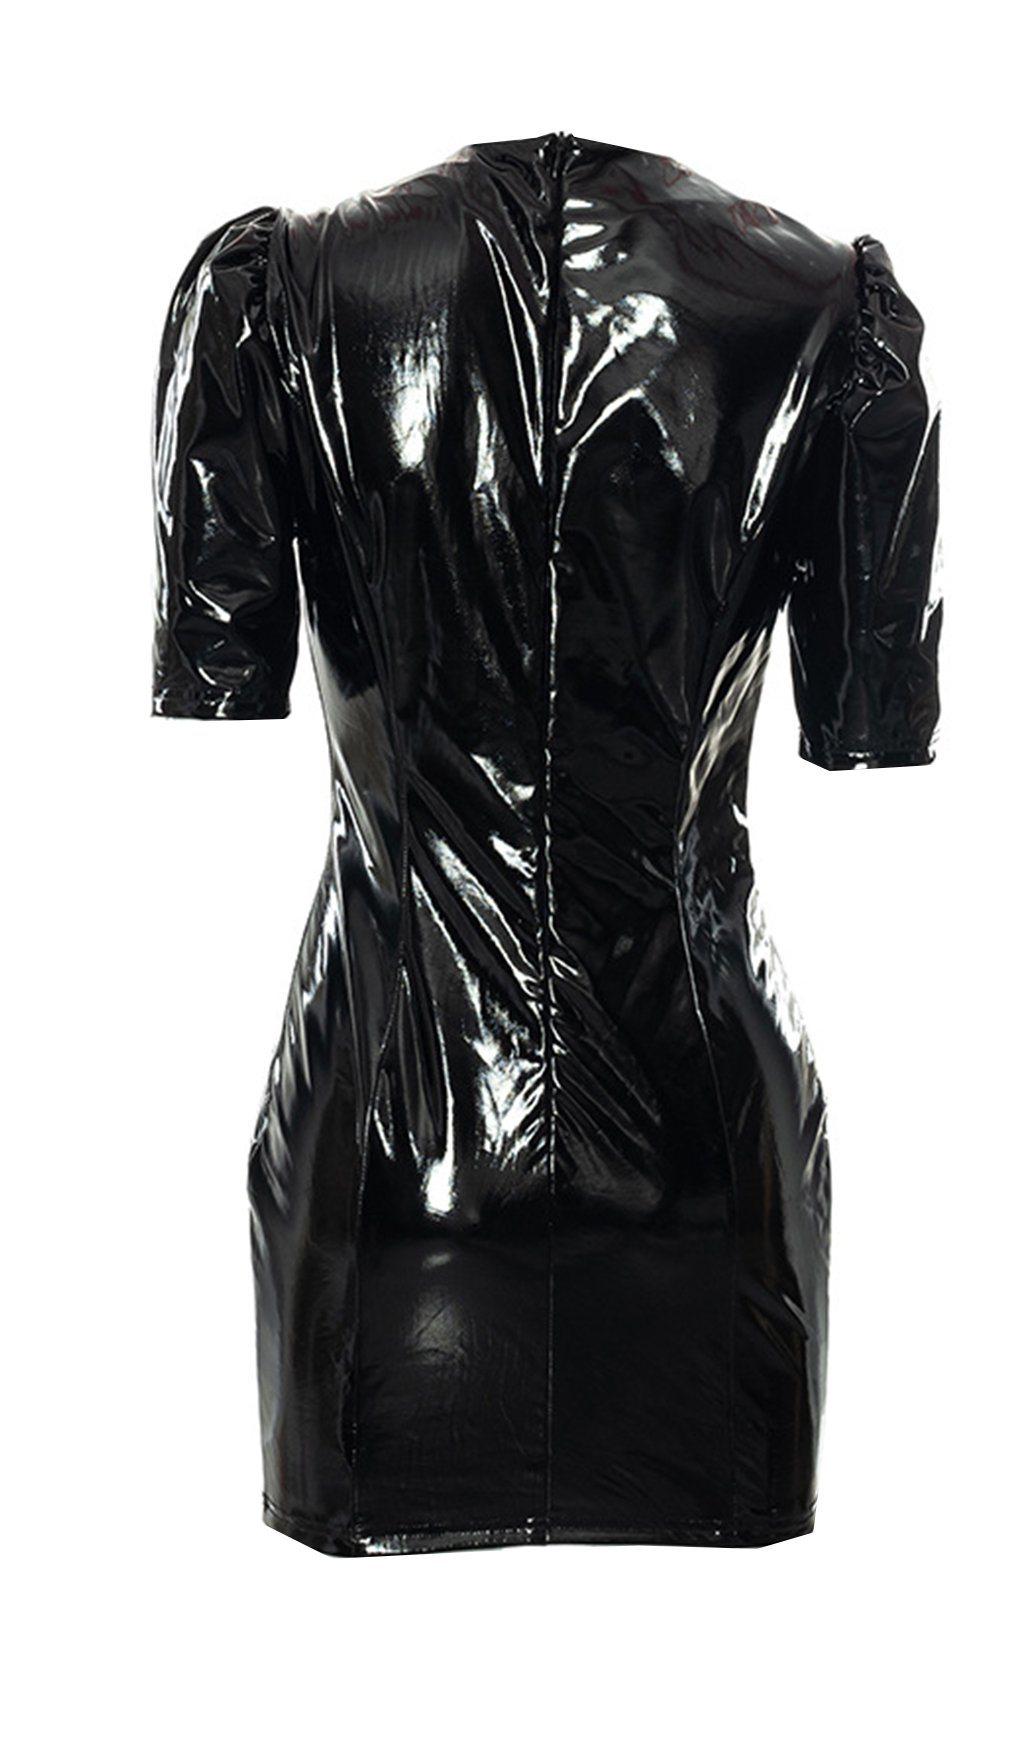 Leather V-neck dress